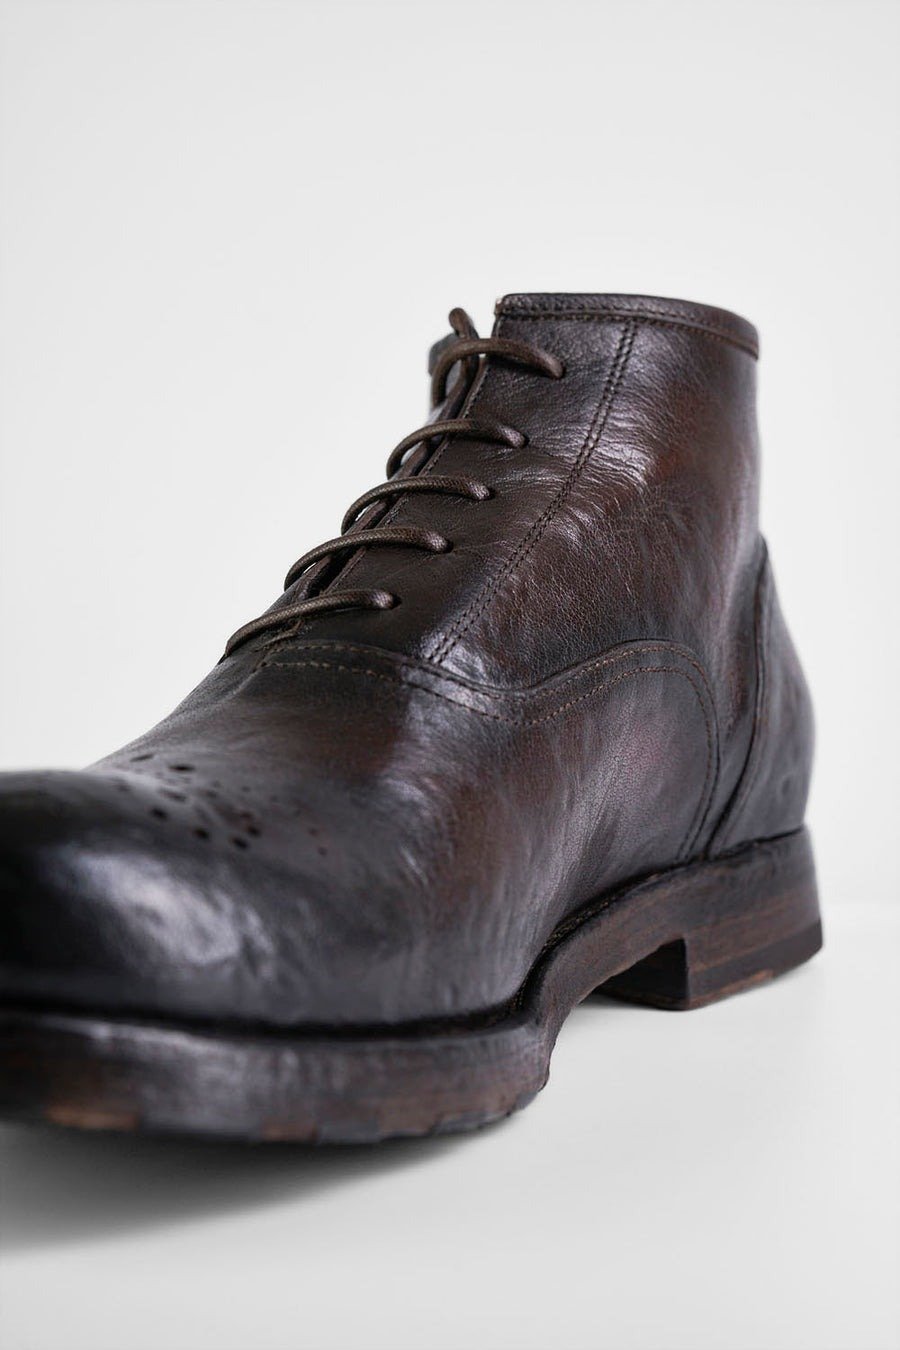 ASTON cigar-brown chukka boots